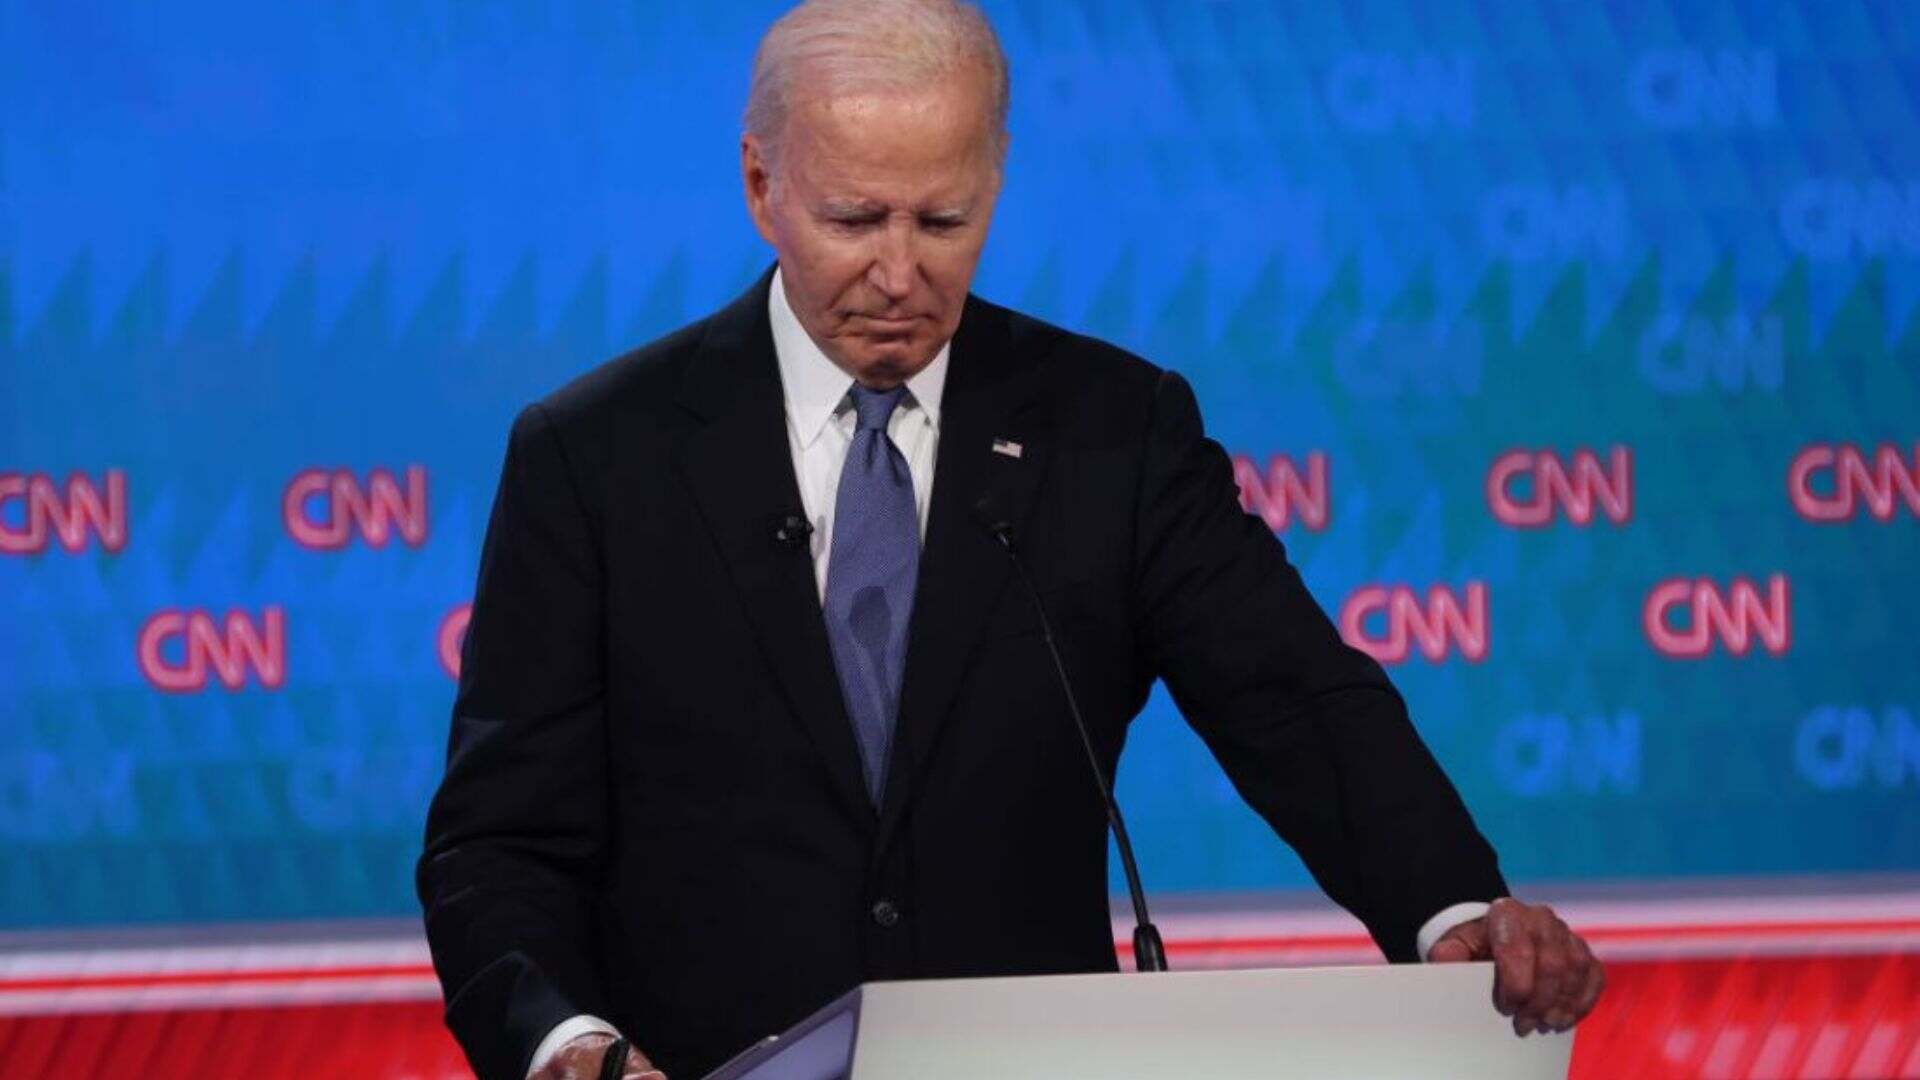 Biden’s Health Addressed By Doctor Following Debate Concerns